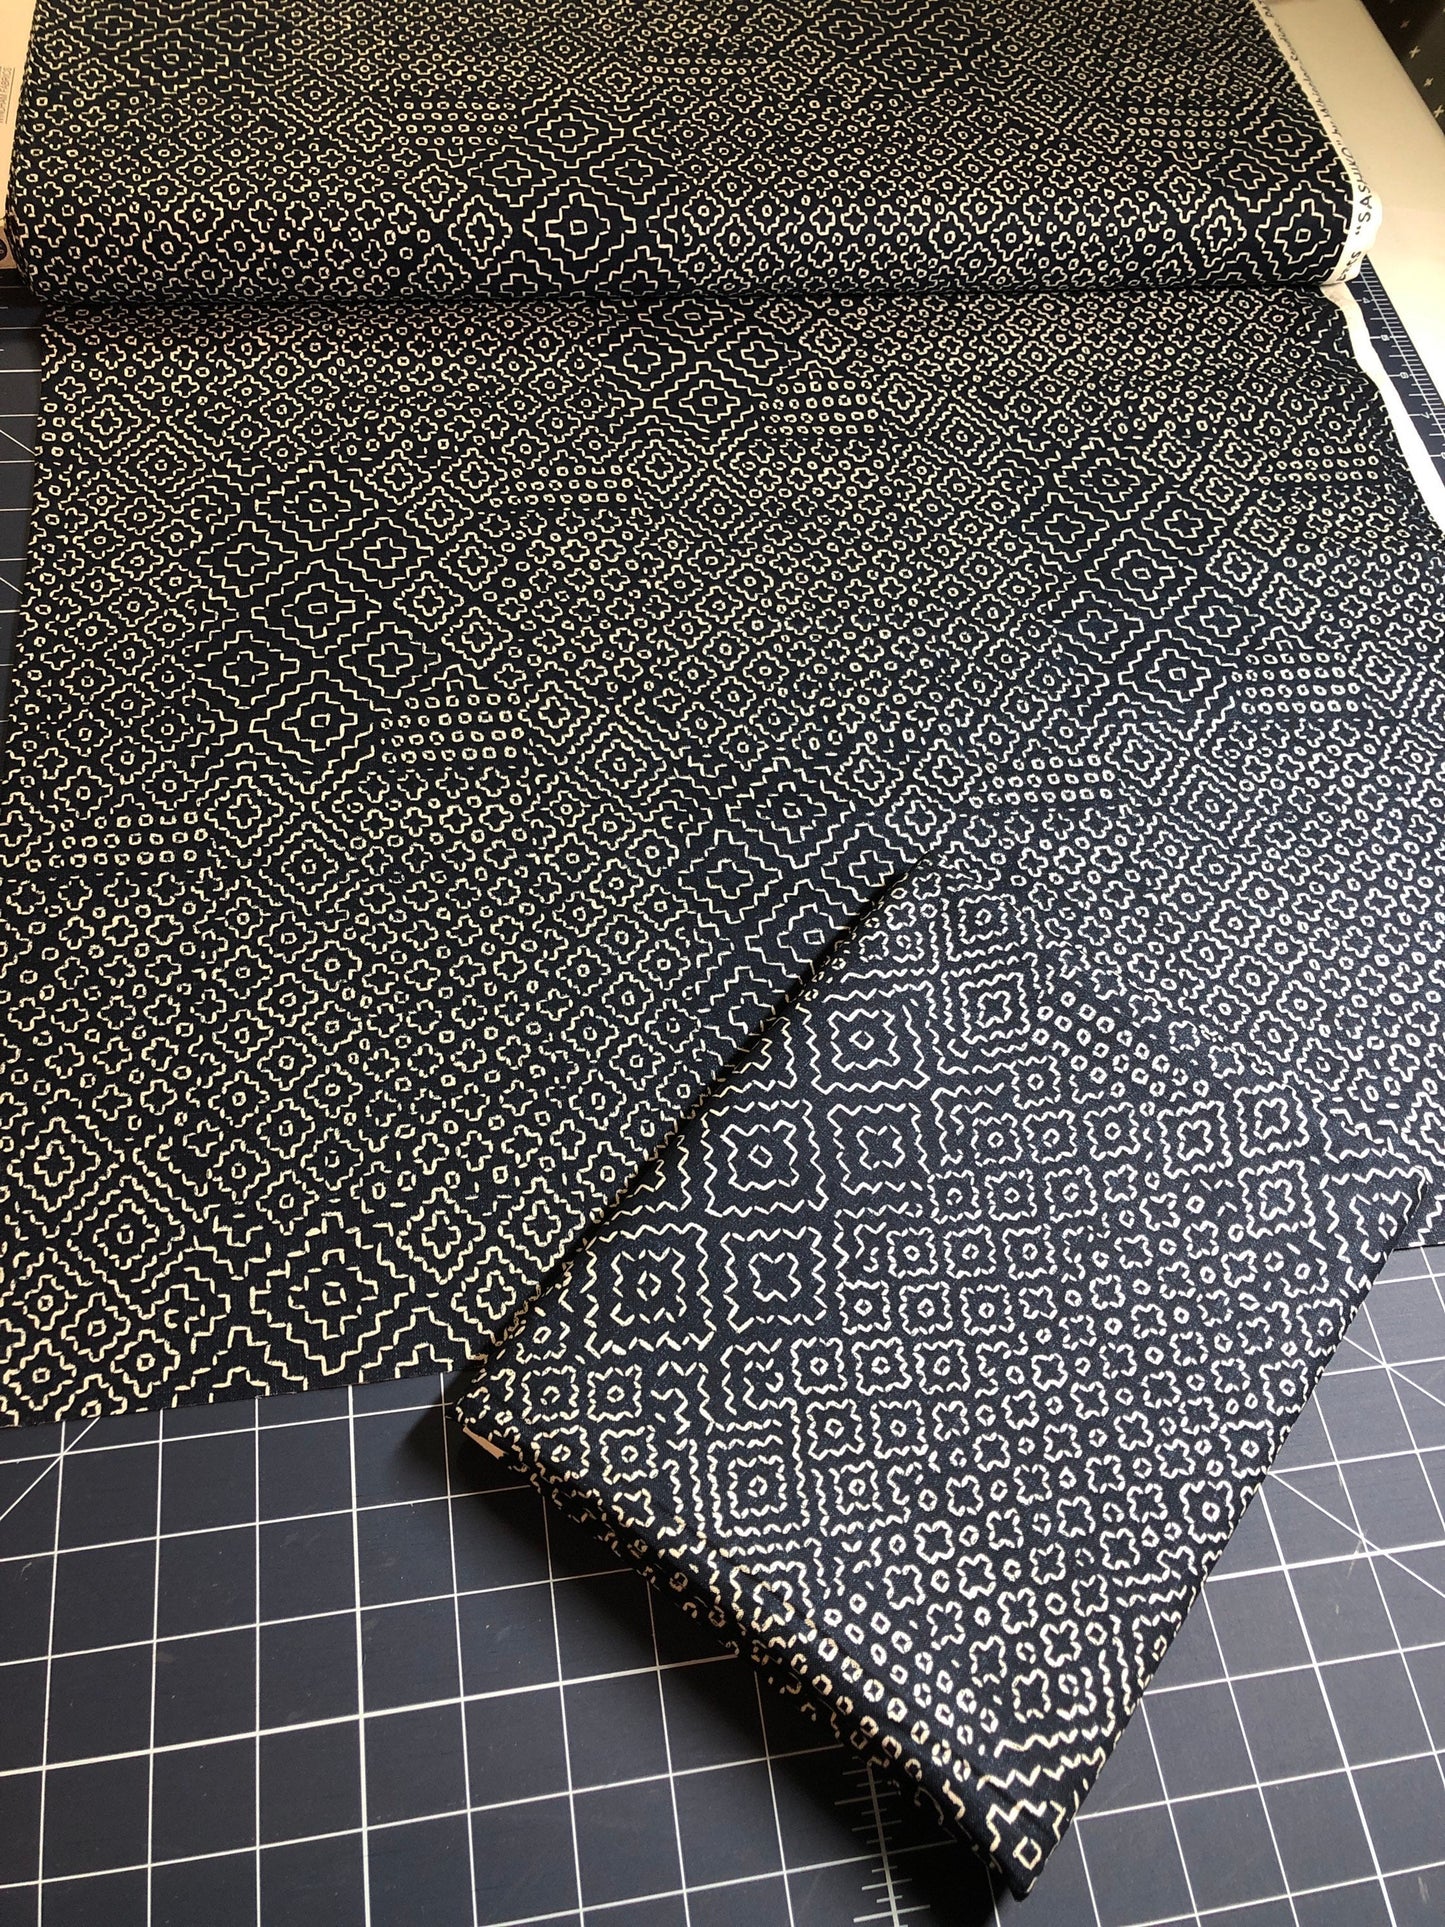 SASHIKO Stitch Sampler Indigo 51811-2 Windham Fabrics, Whistler Studios, Quilt Fabric, Japanese, Quilting, Cotton Fabric, Fabric By The Yard